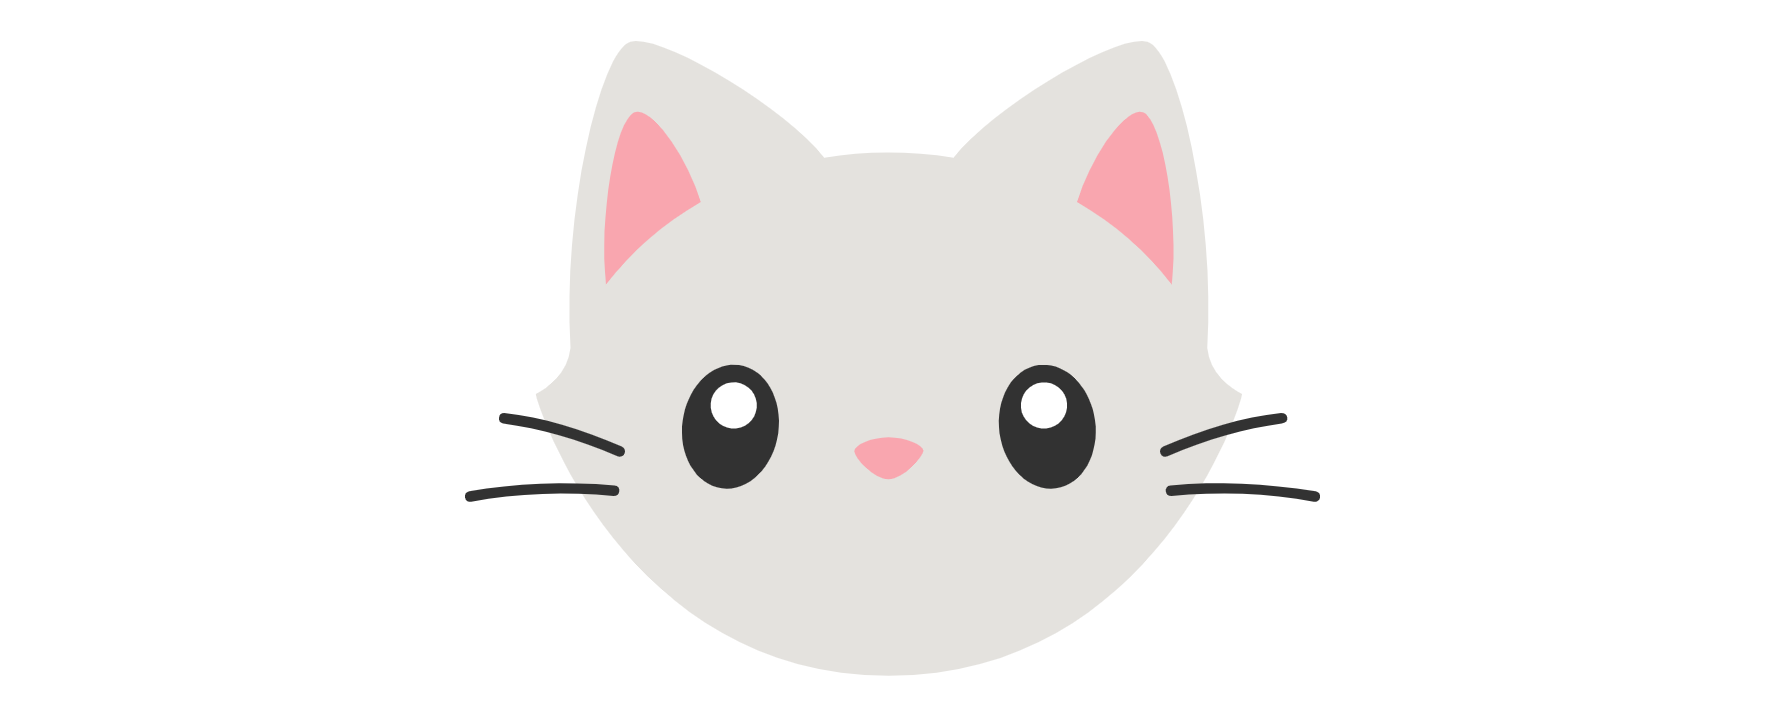 A minimalist illustration of a cute Kitten’s head.